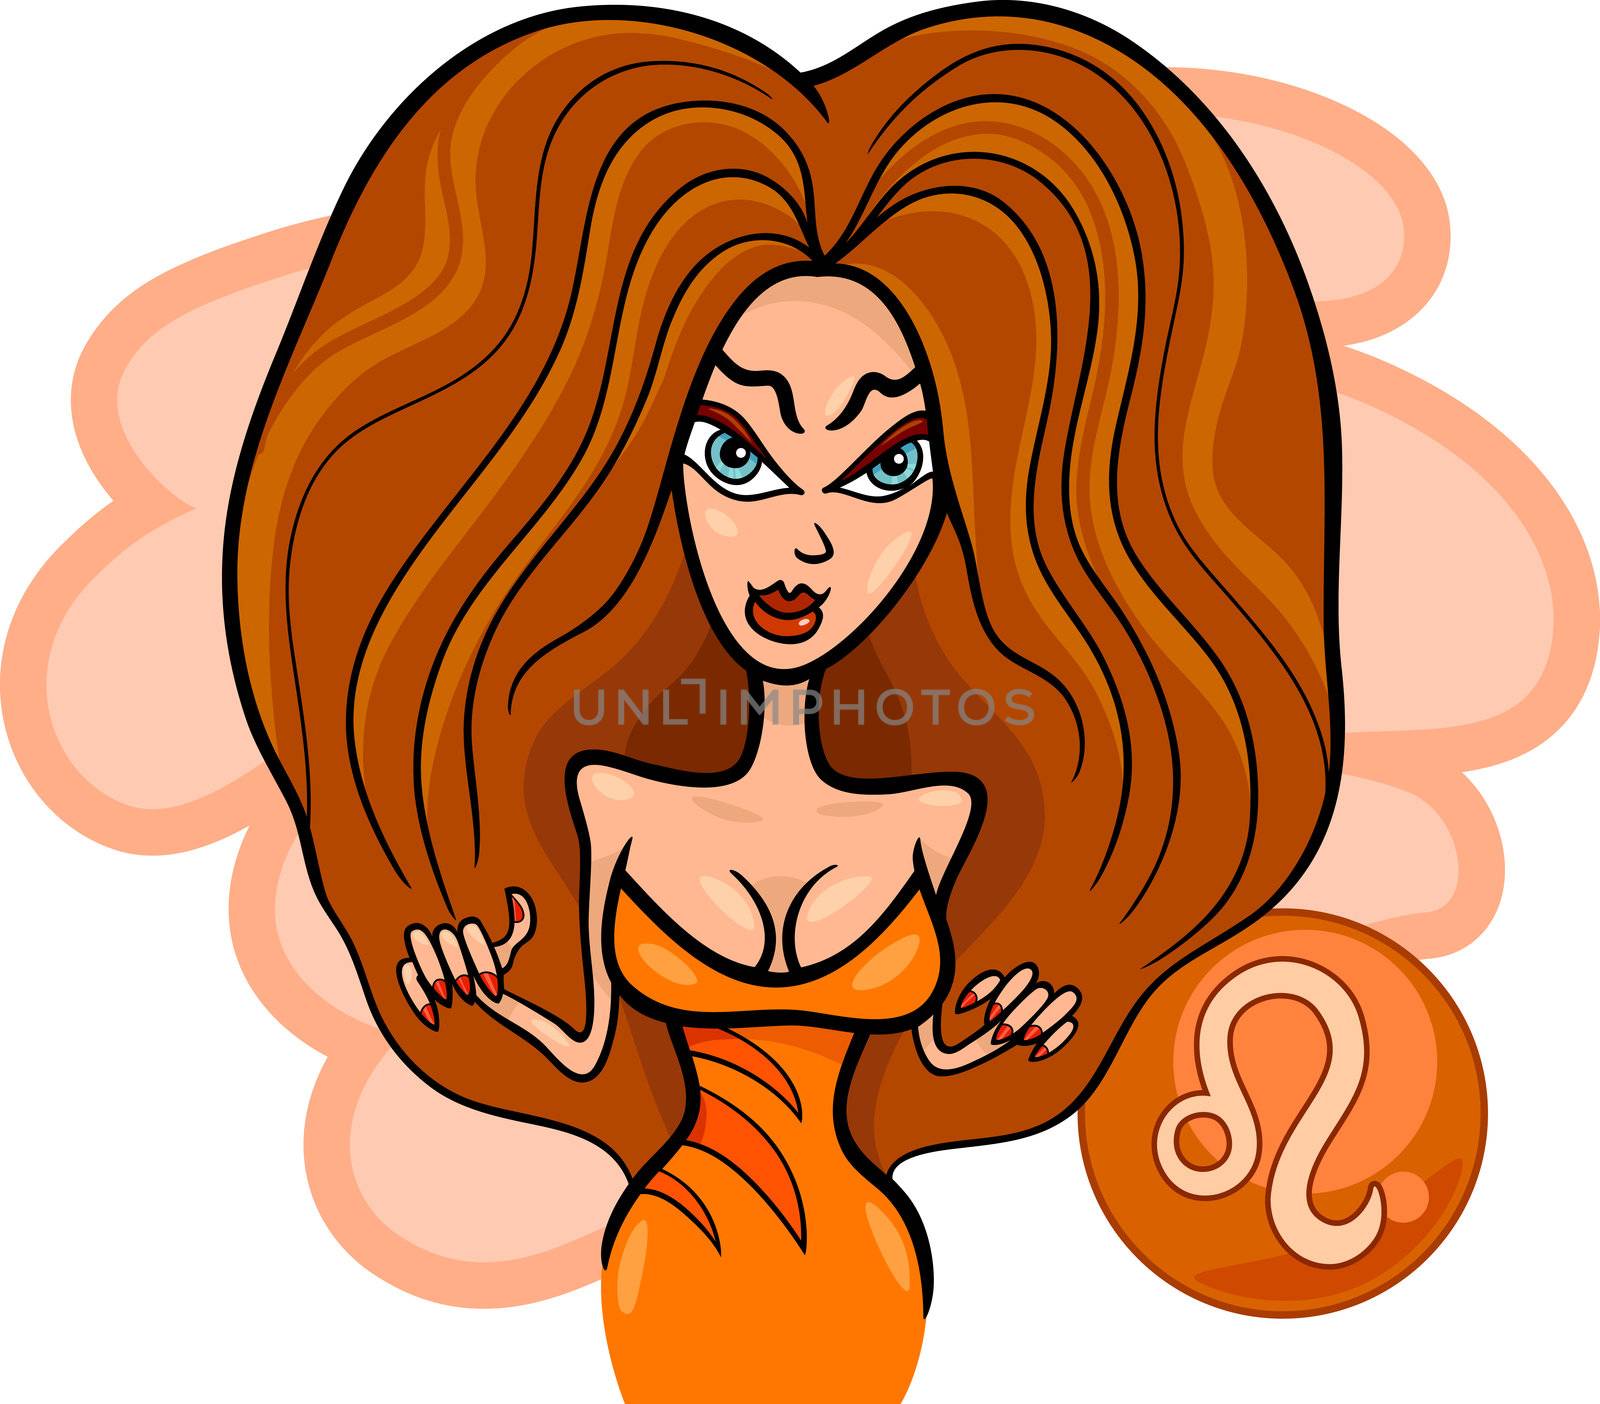 Illustration of Beautiful Woman Cartoon Character and Leo Horoscope Zodiac Sign